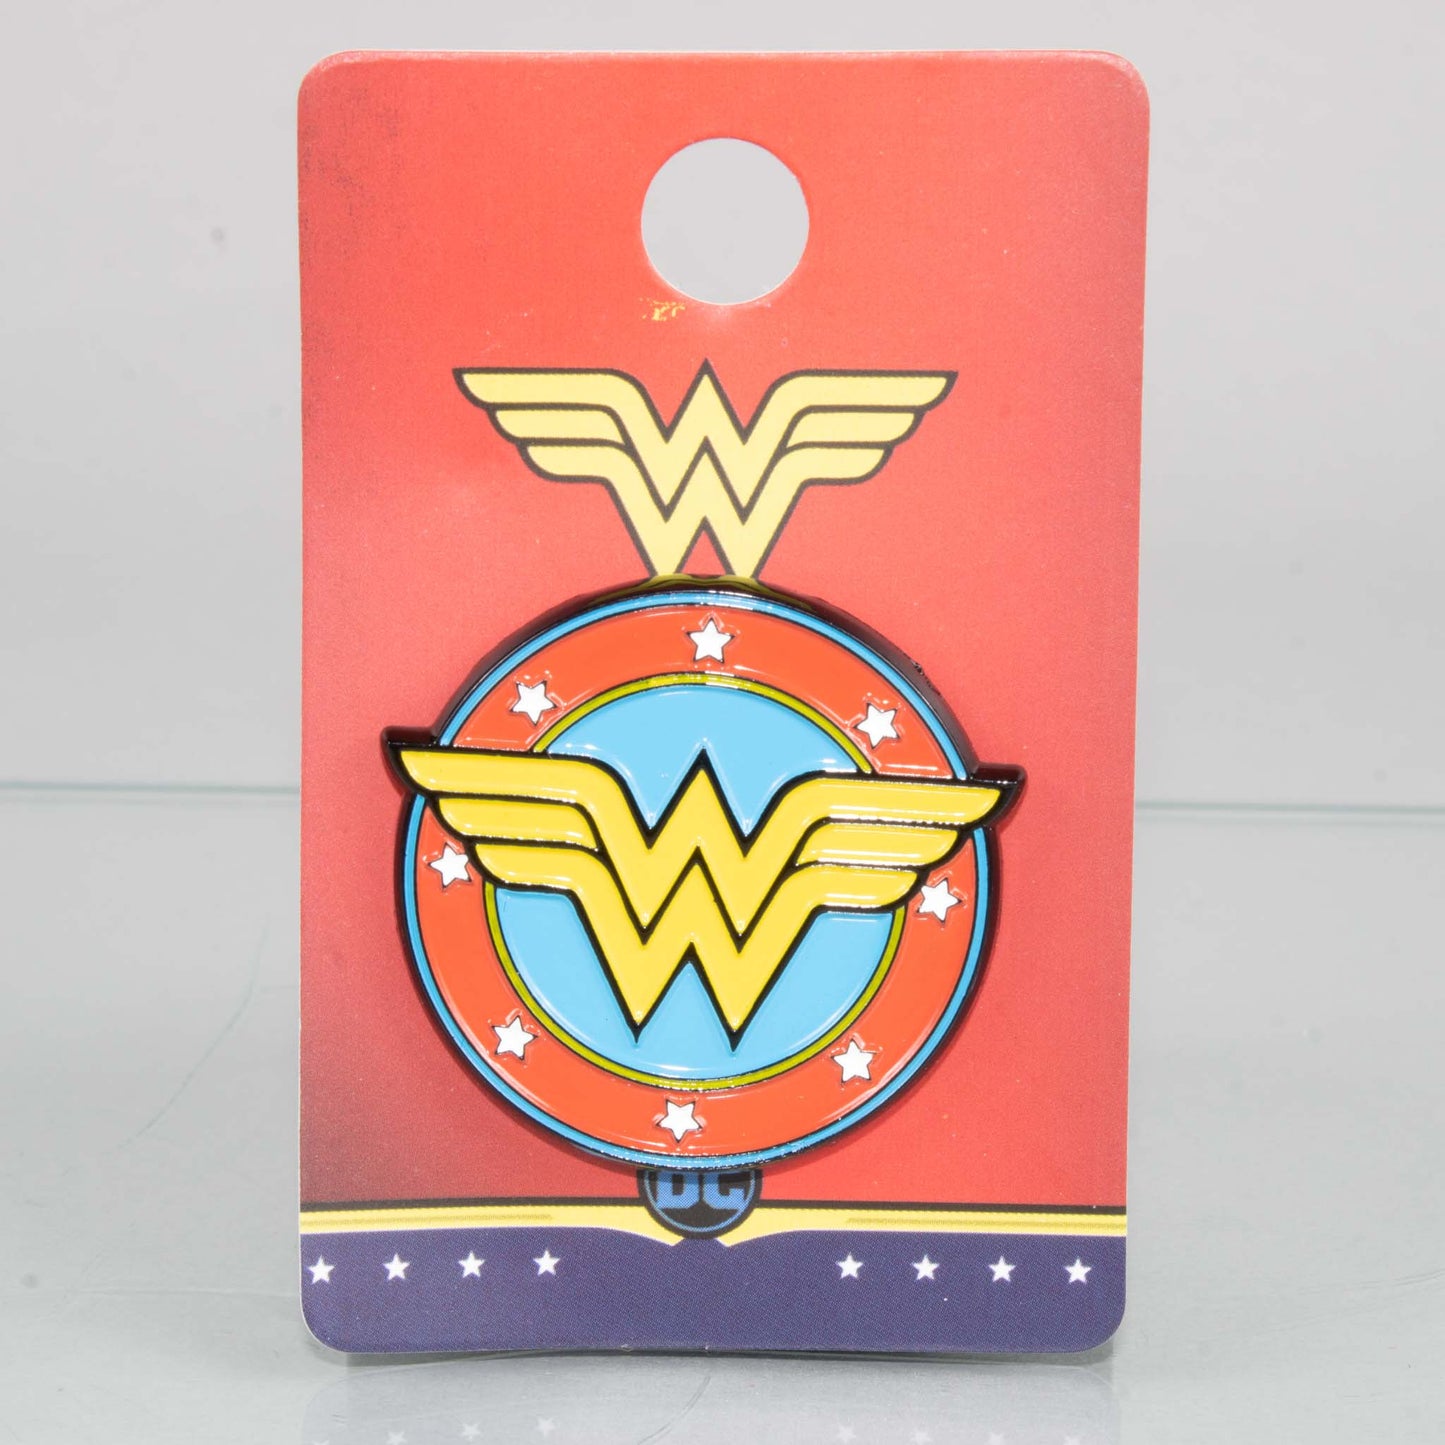 Pin on Wonder Woman